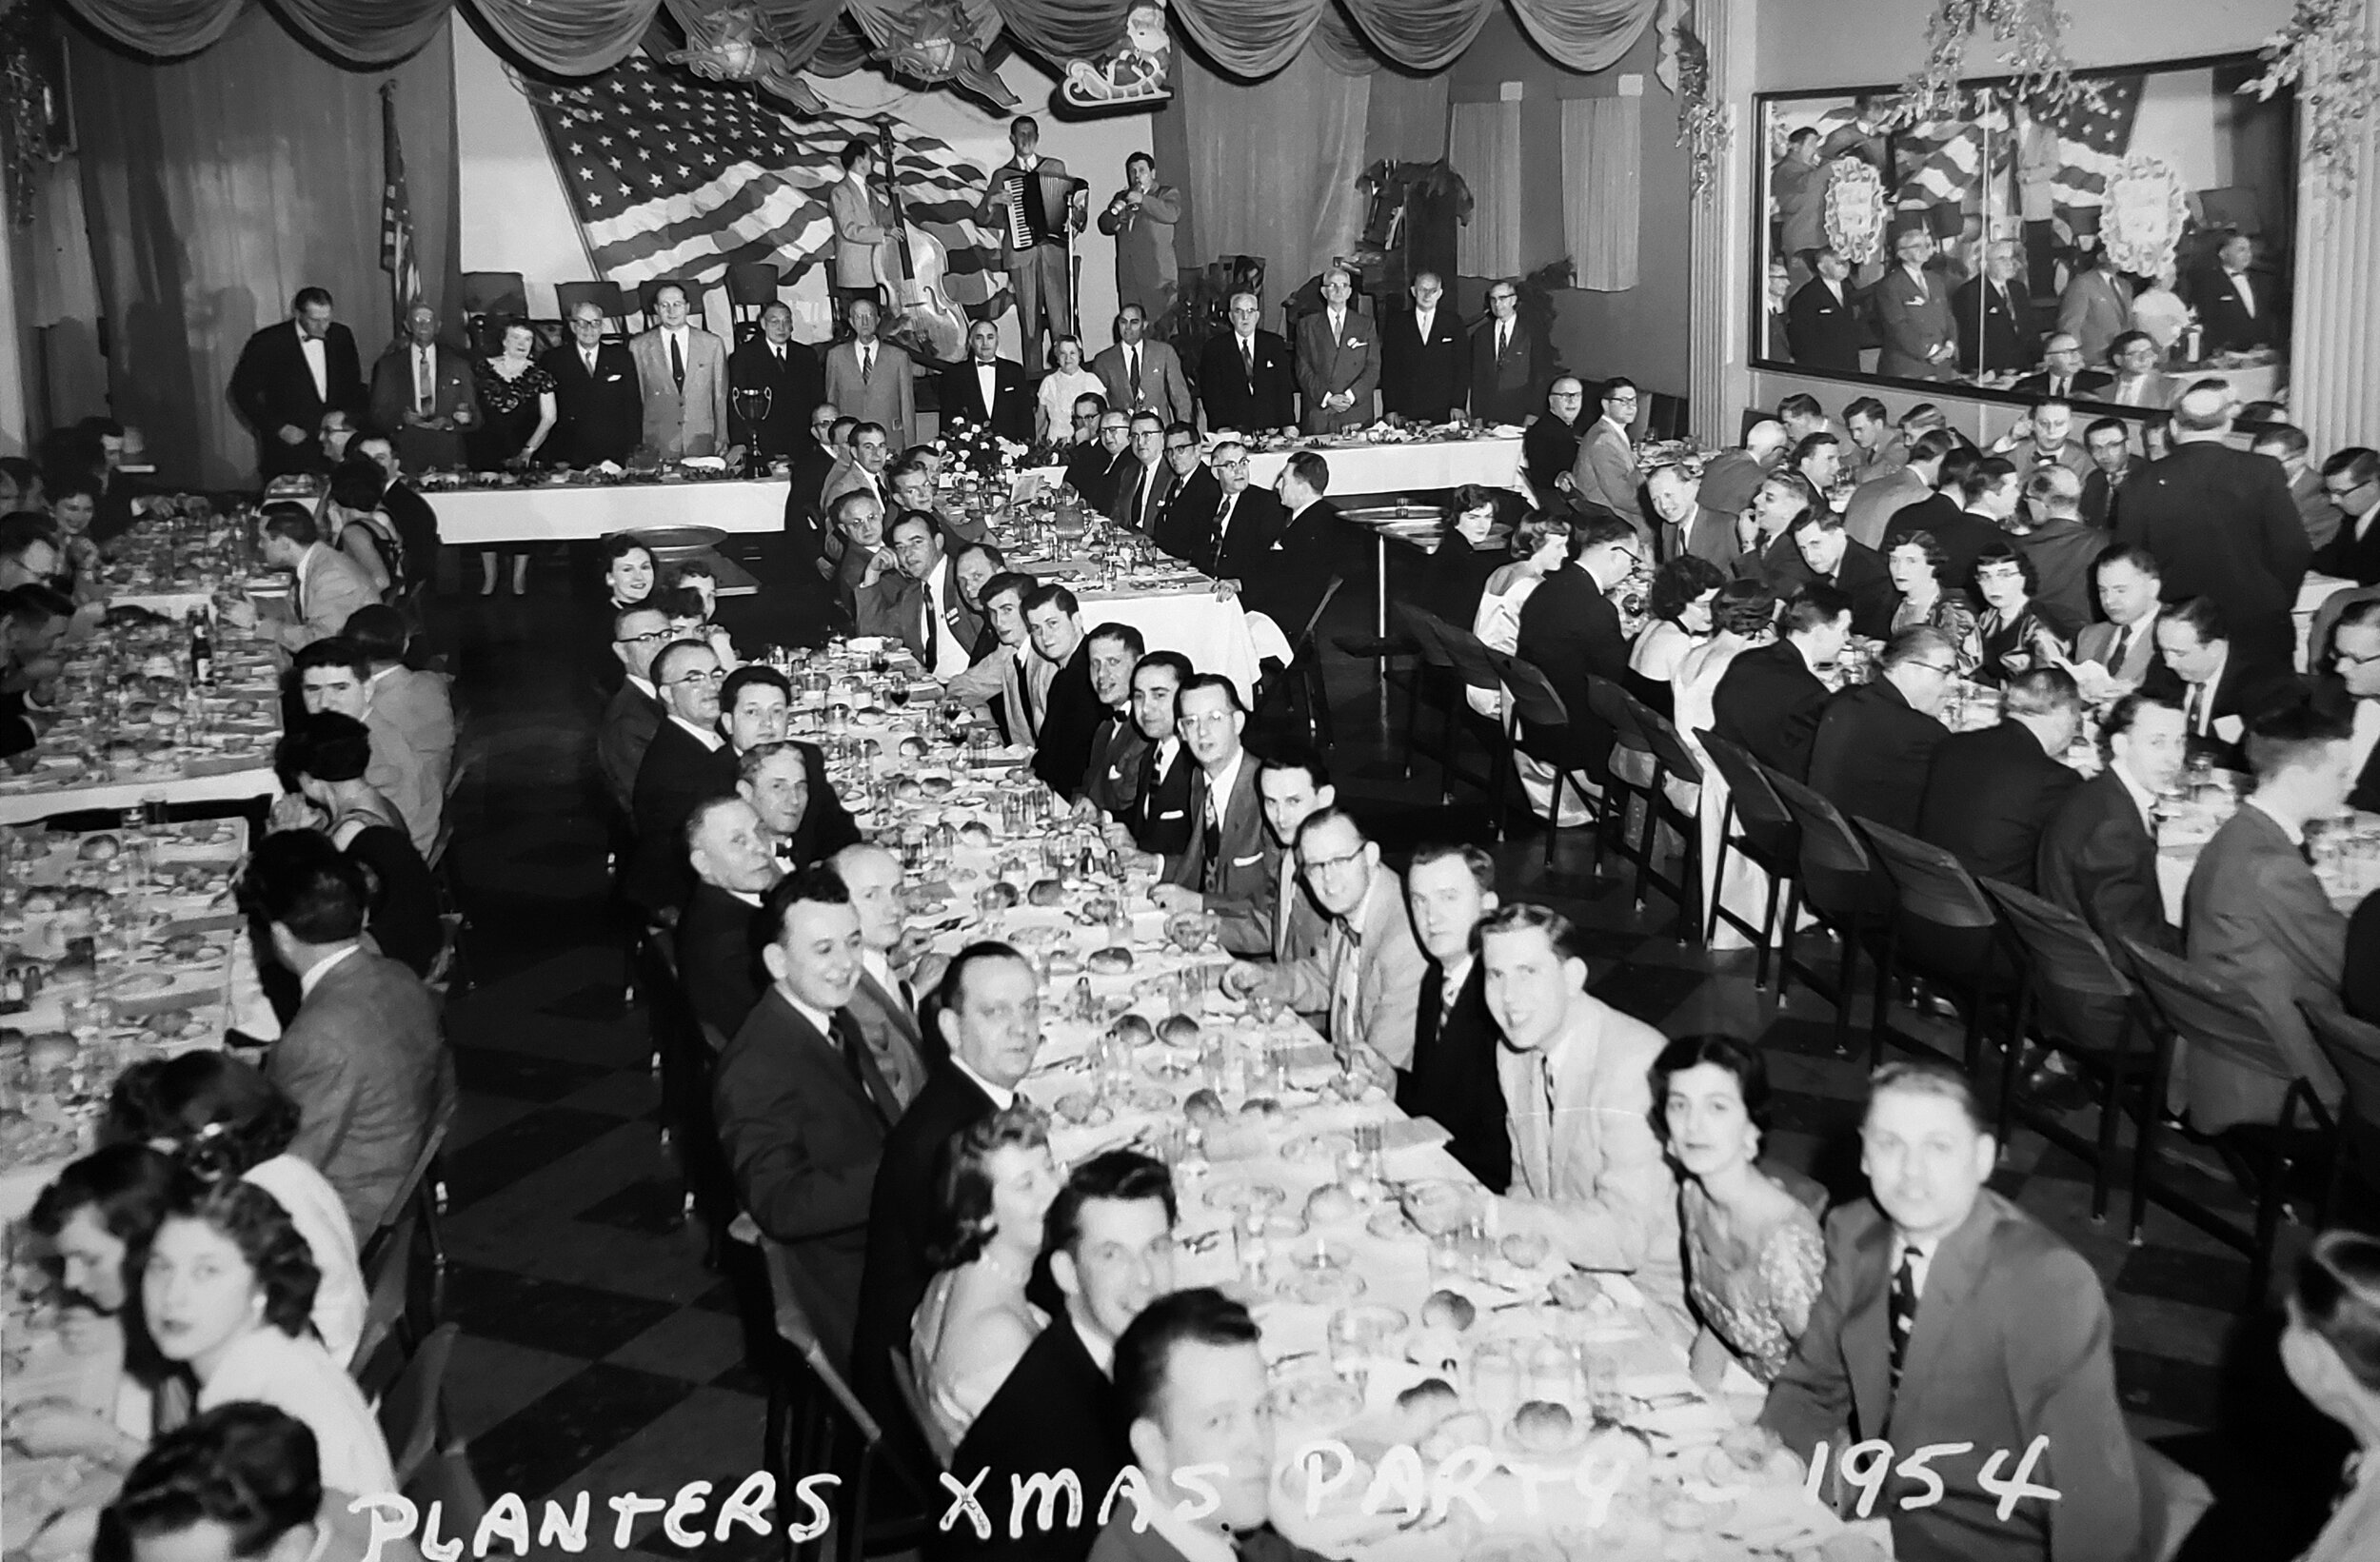 Planters Xmas Party 1954